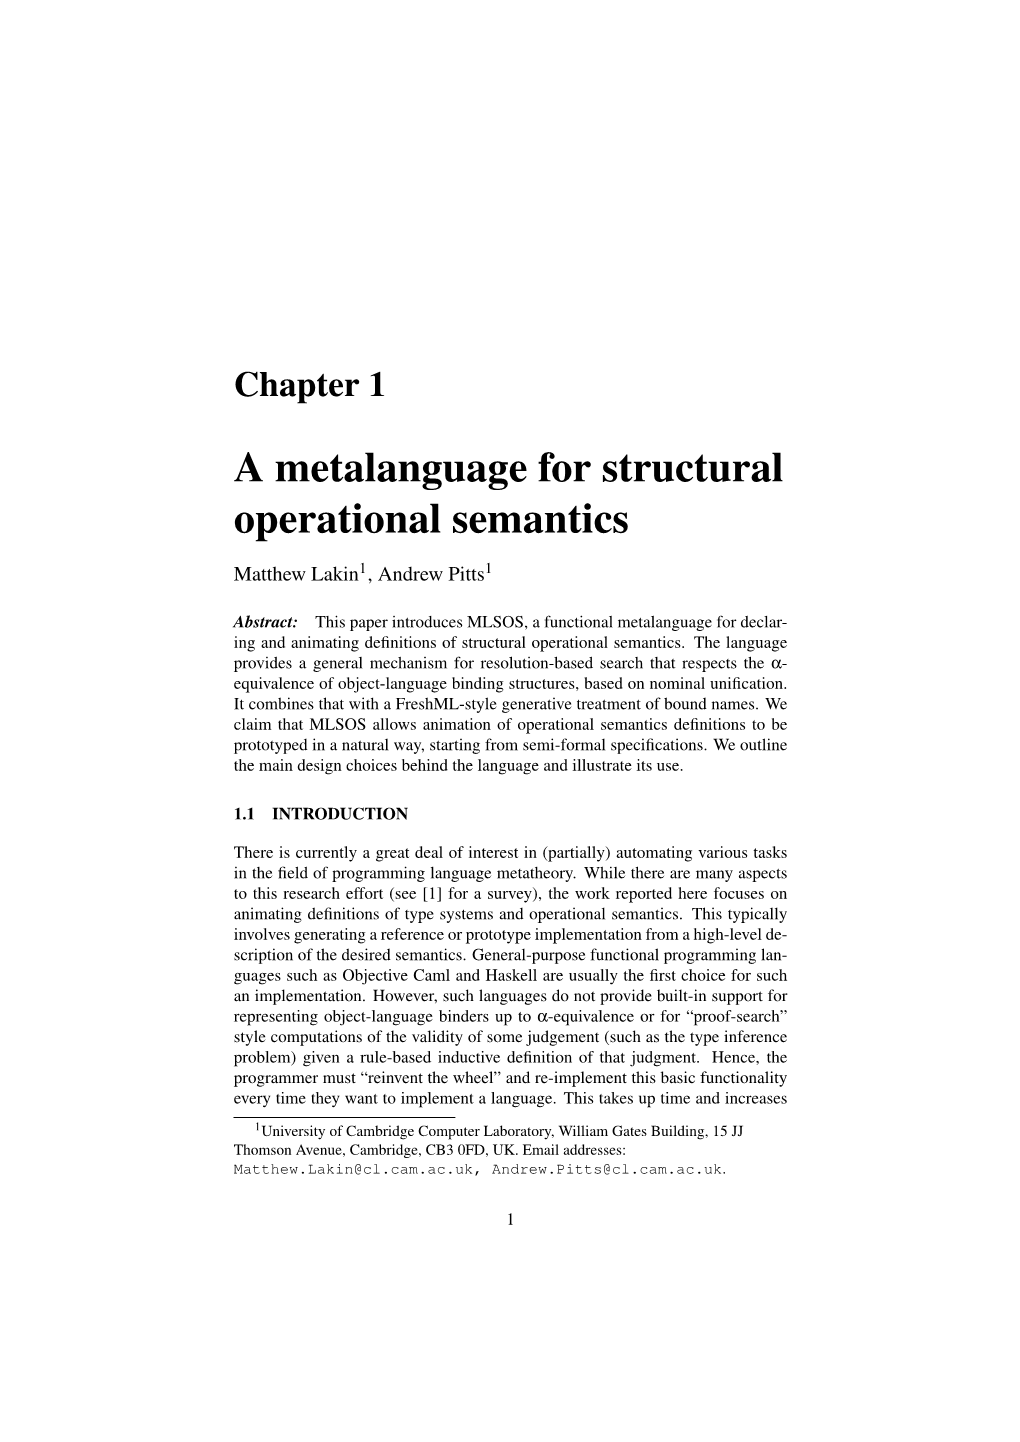 A Metalanguage for Structural Operational Semantics